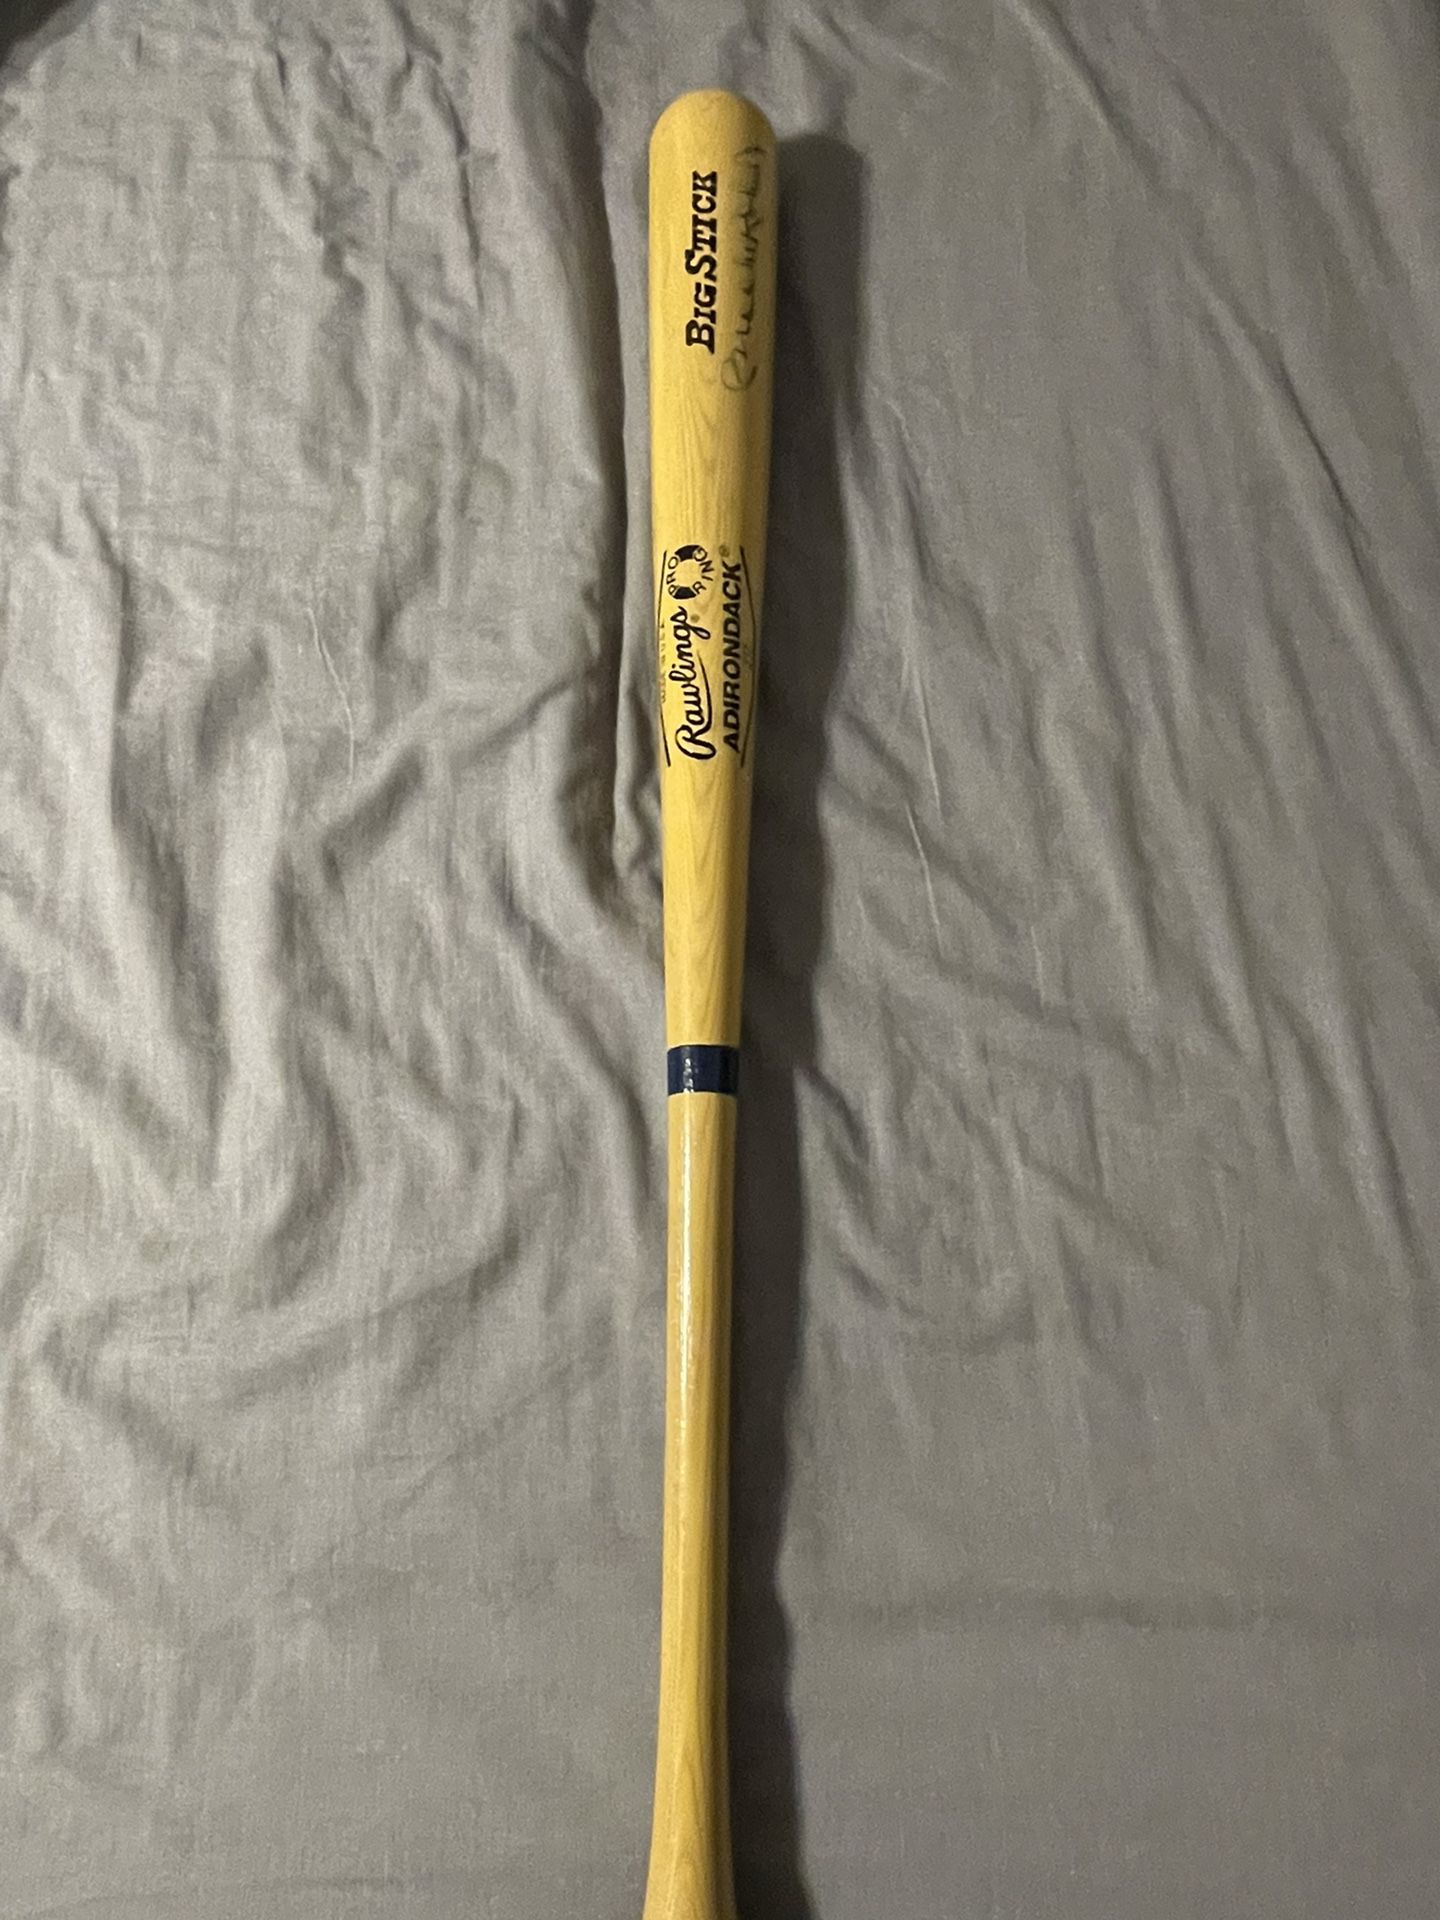 Brooks Robinson Signed Baseball Bat Adirondack Big Stick HOF 83 Certificate tube